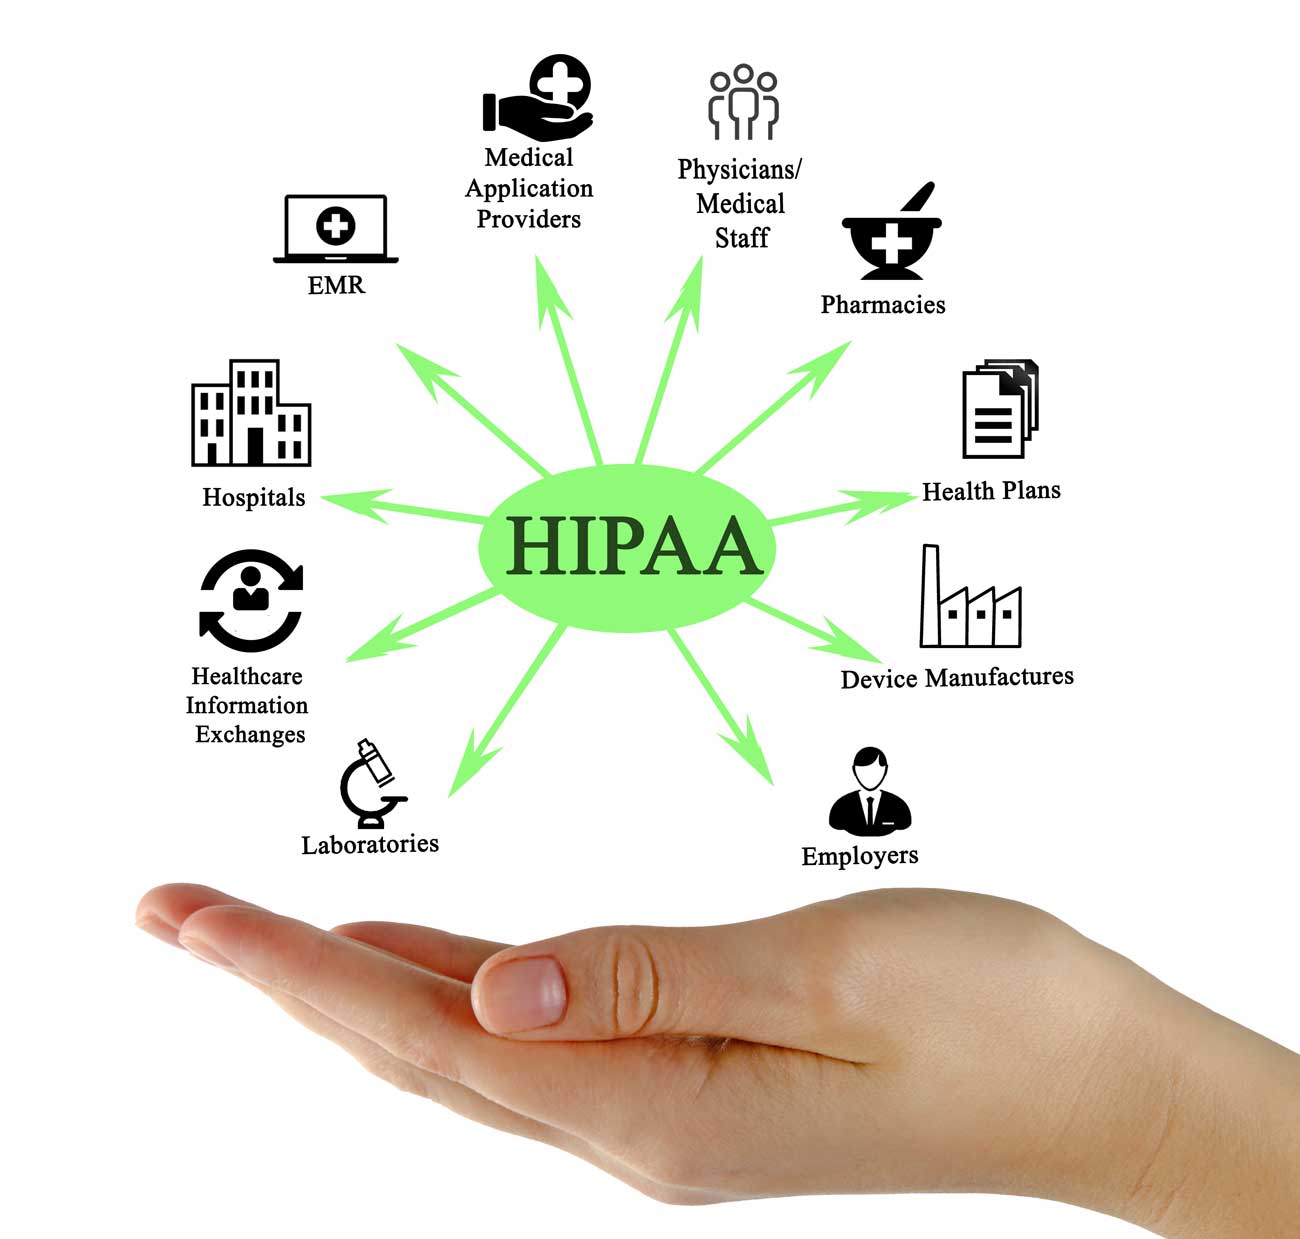 HIPAA Application